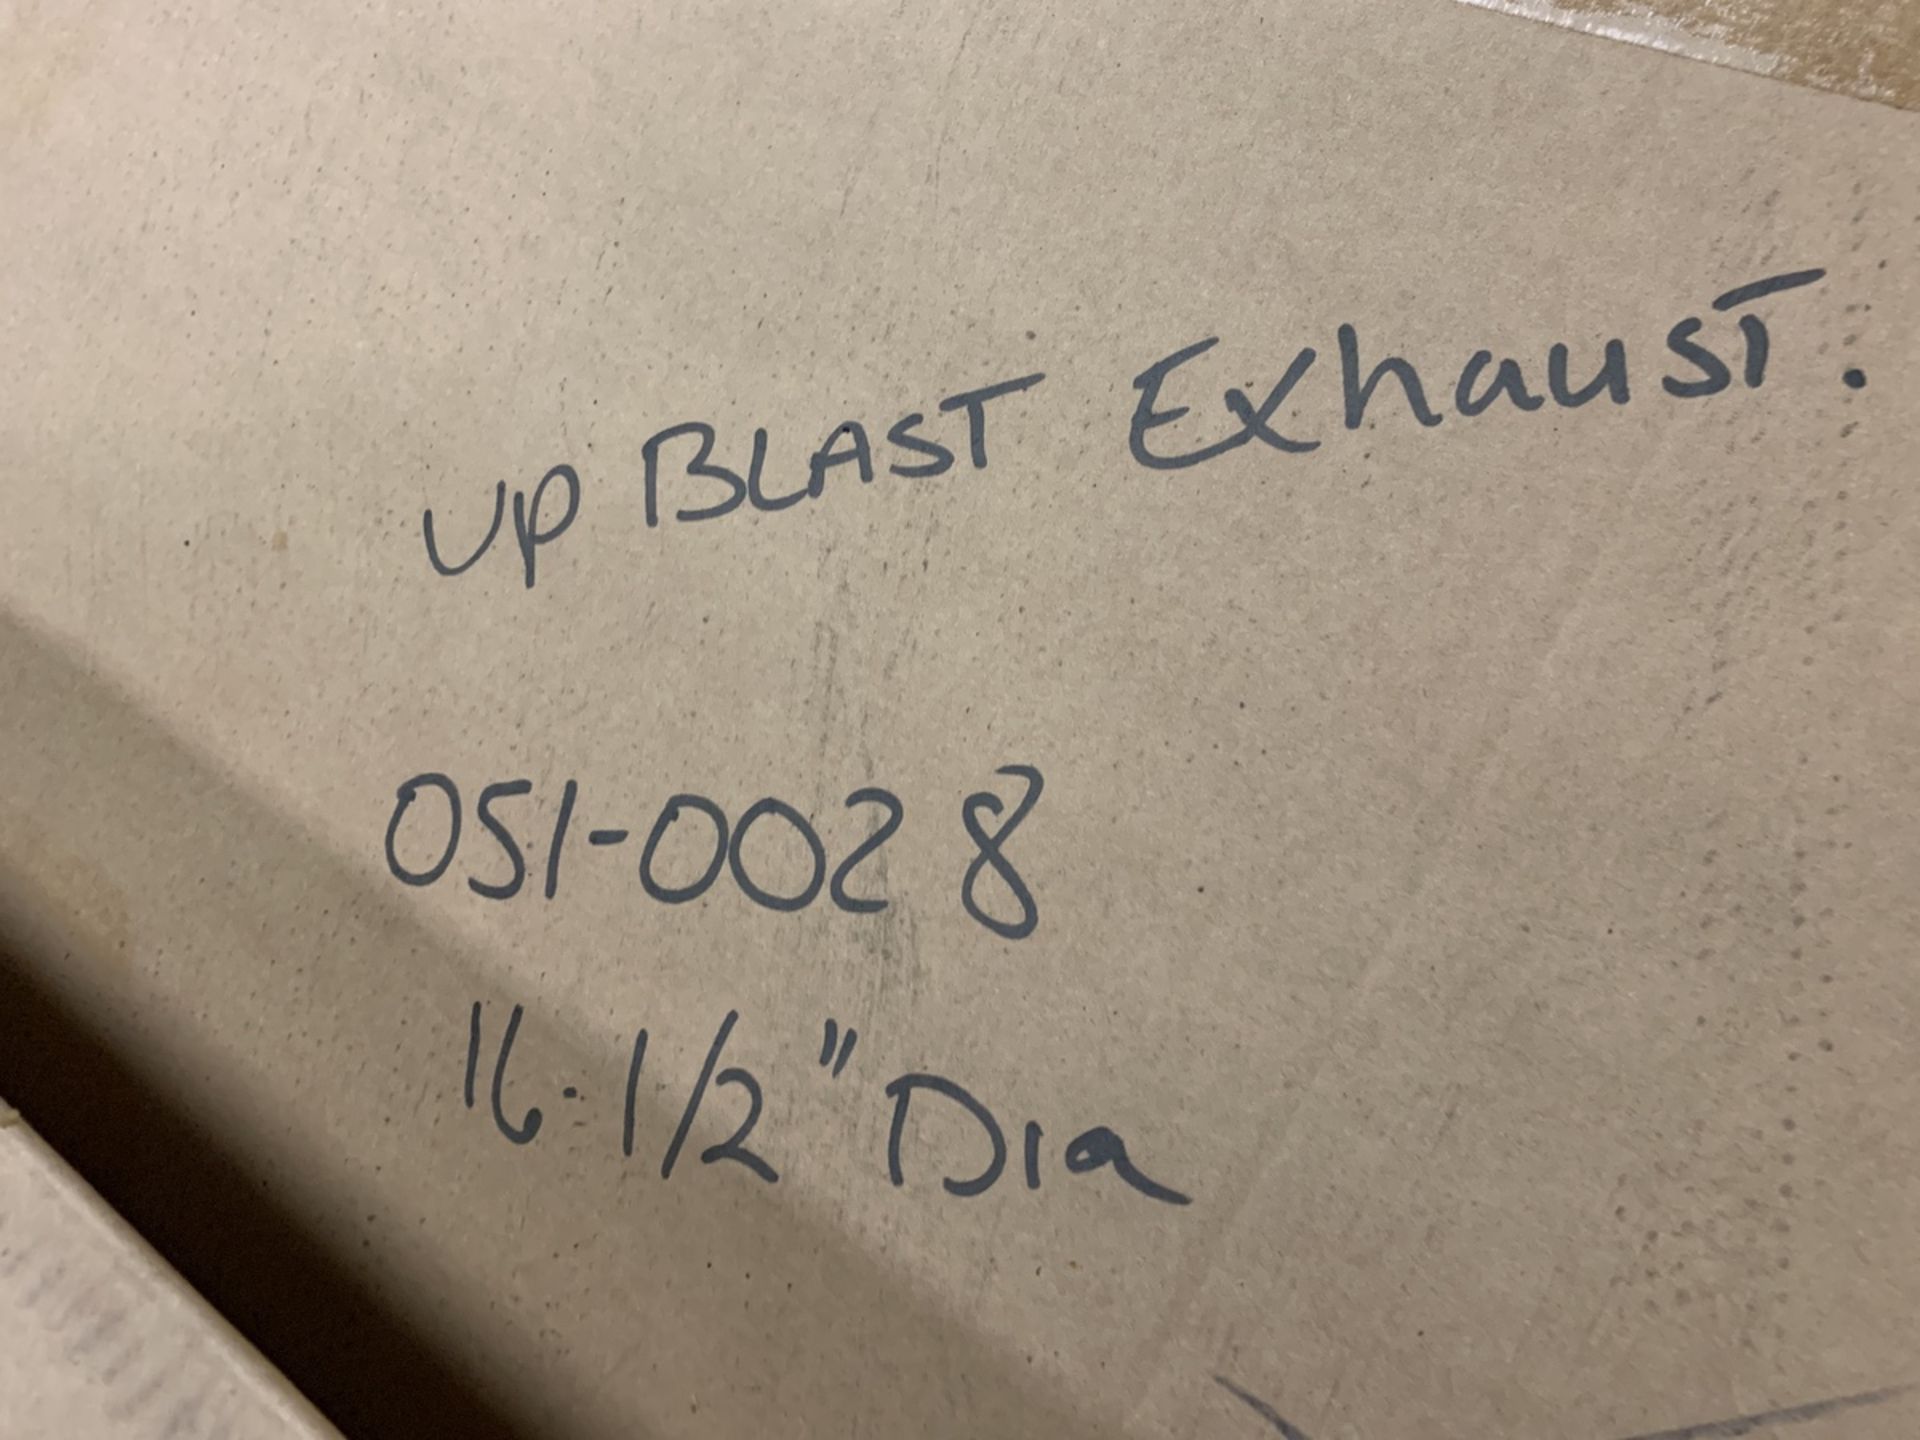 16 1/2" Diameter Upblast Exhaust - New in Box | Rig Fee: 25 - Image 2 of 2